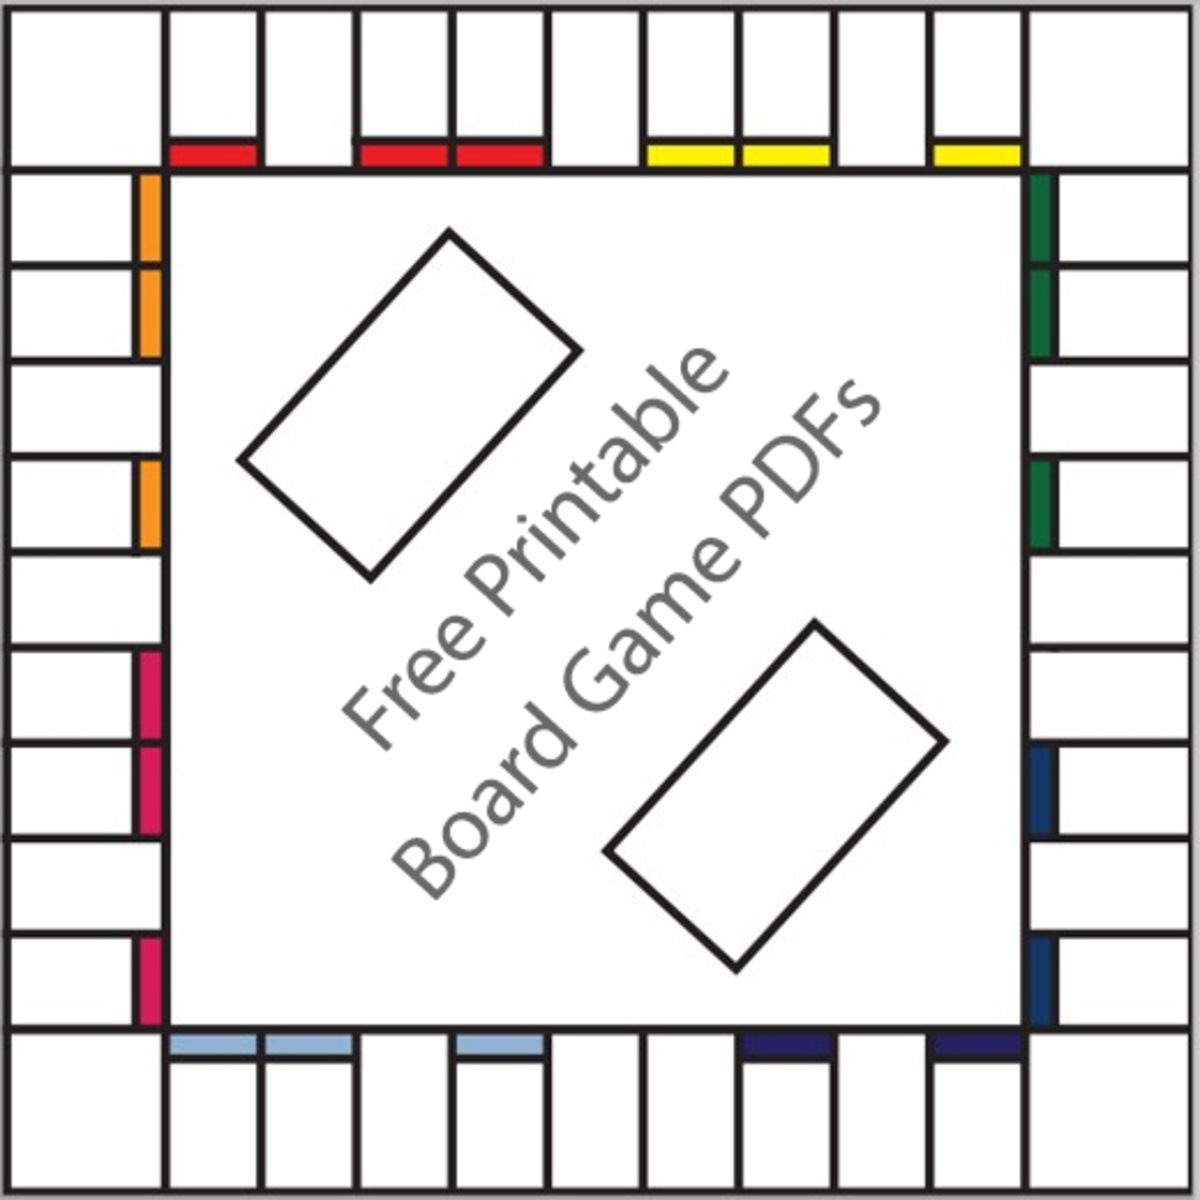 board games templates